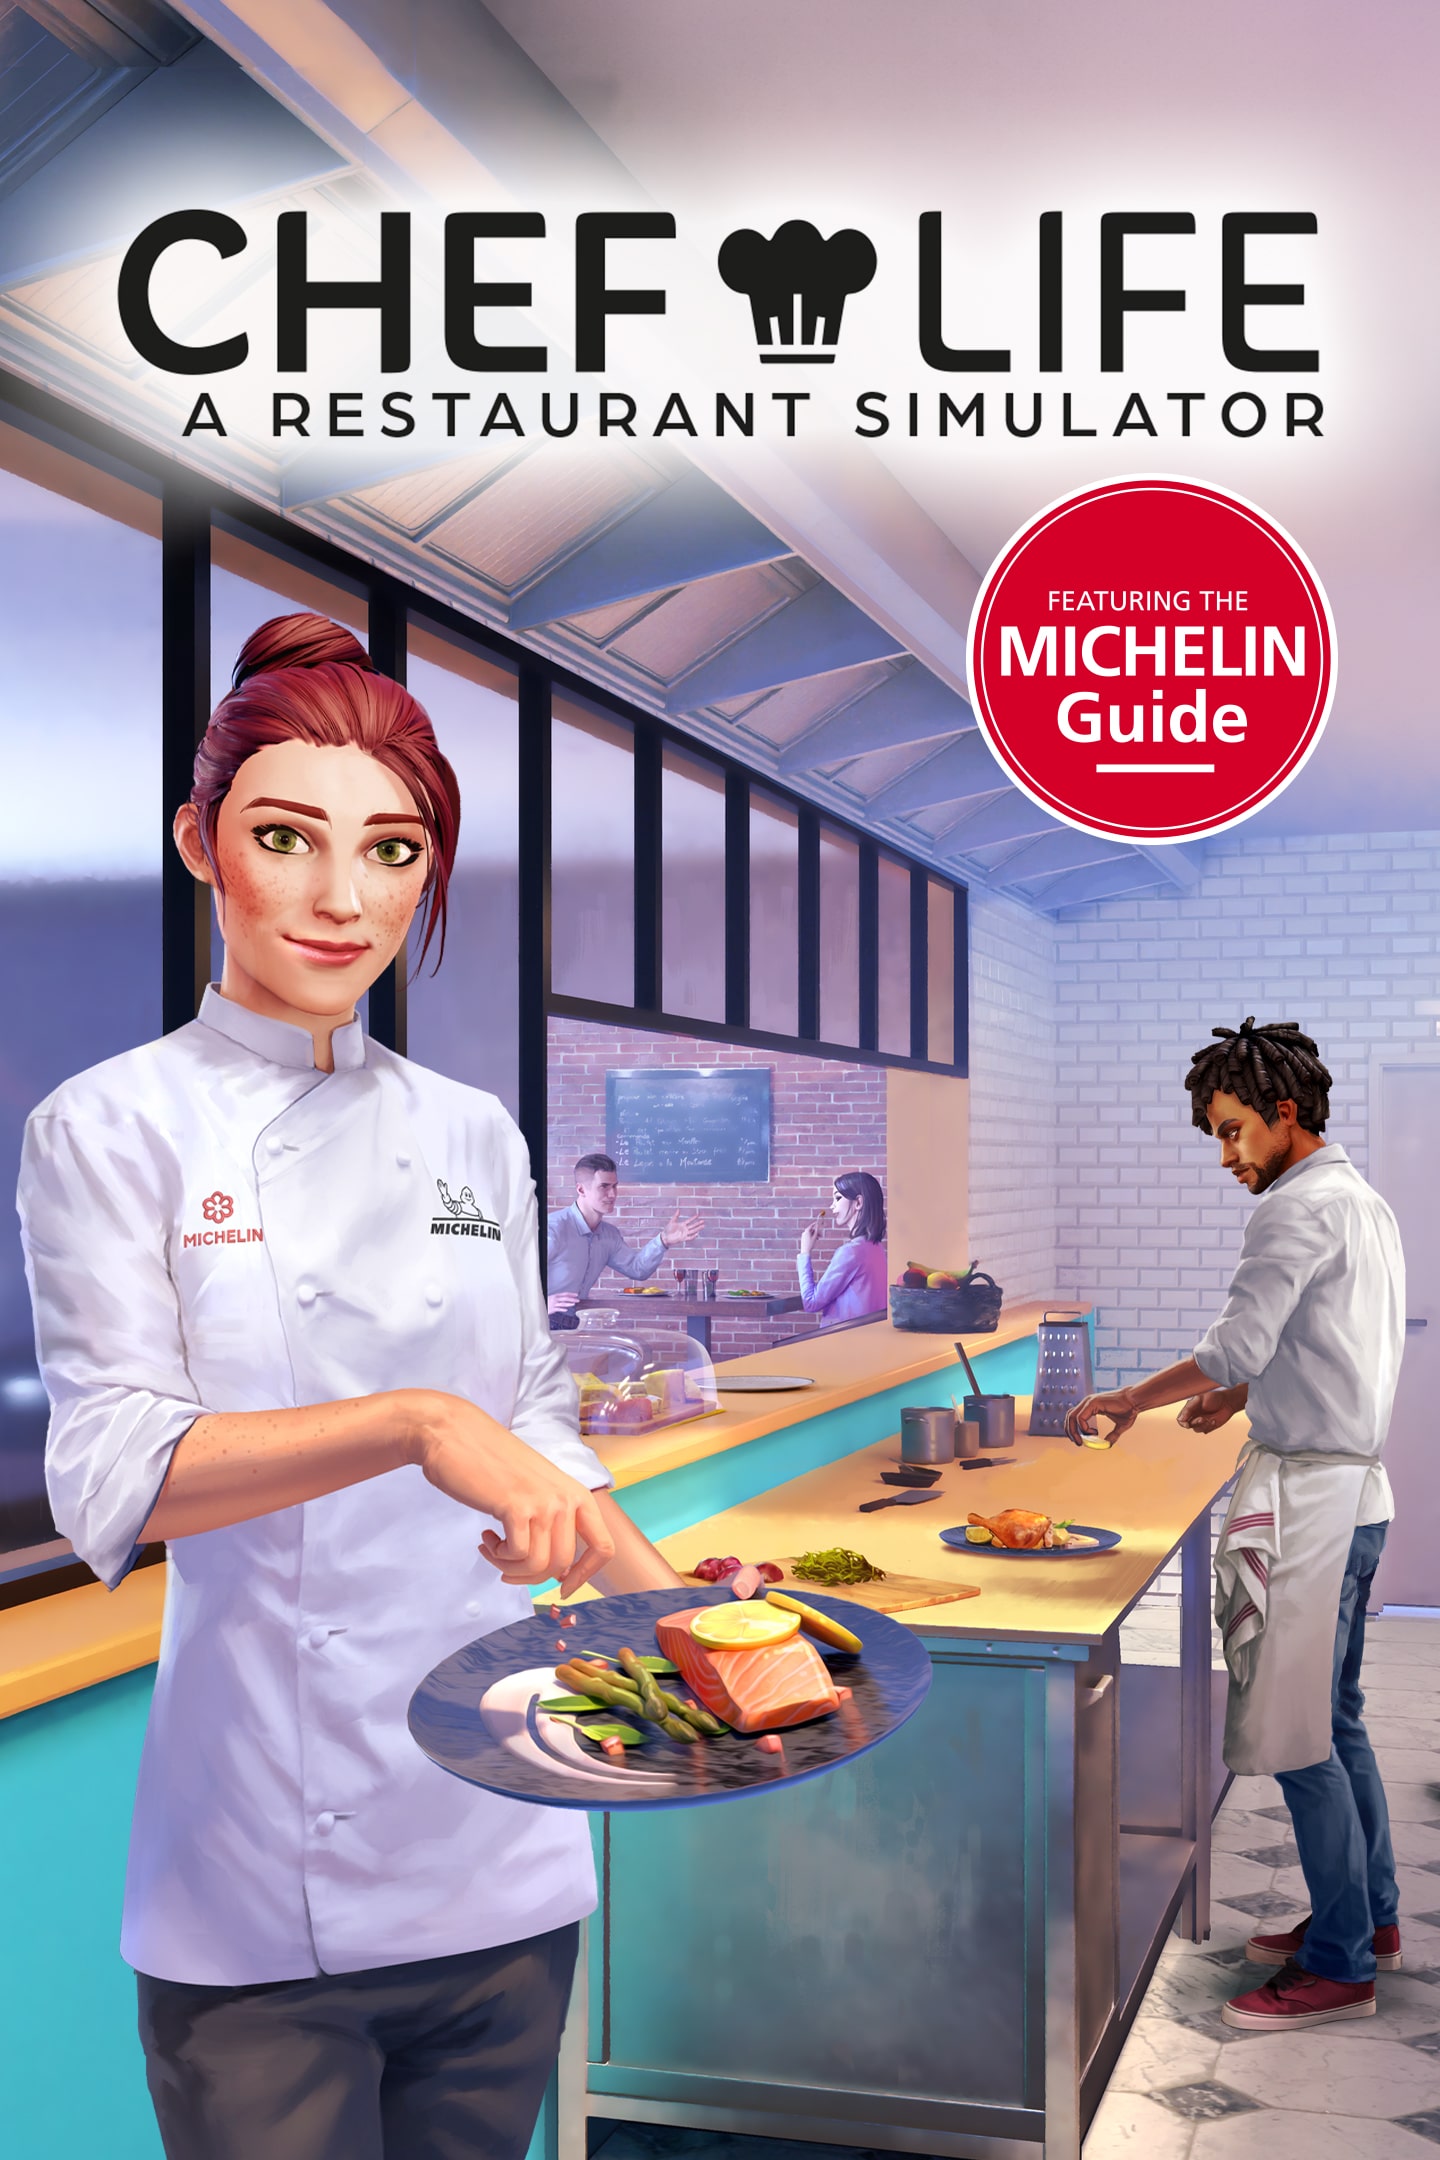 Let's Play: Restaurant Simulator